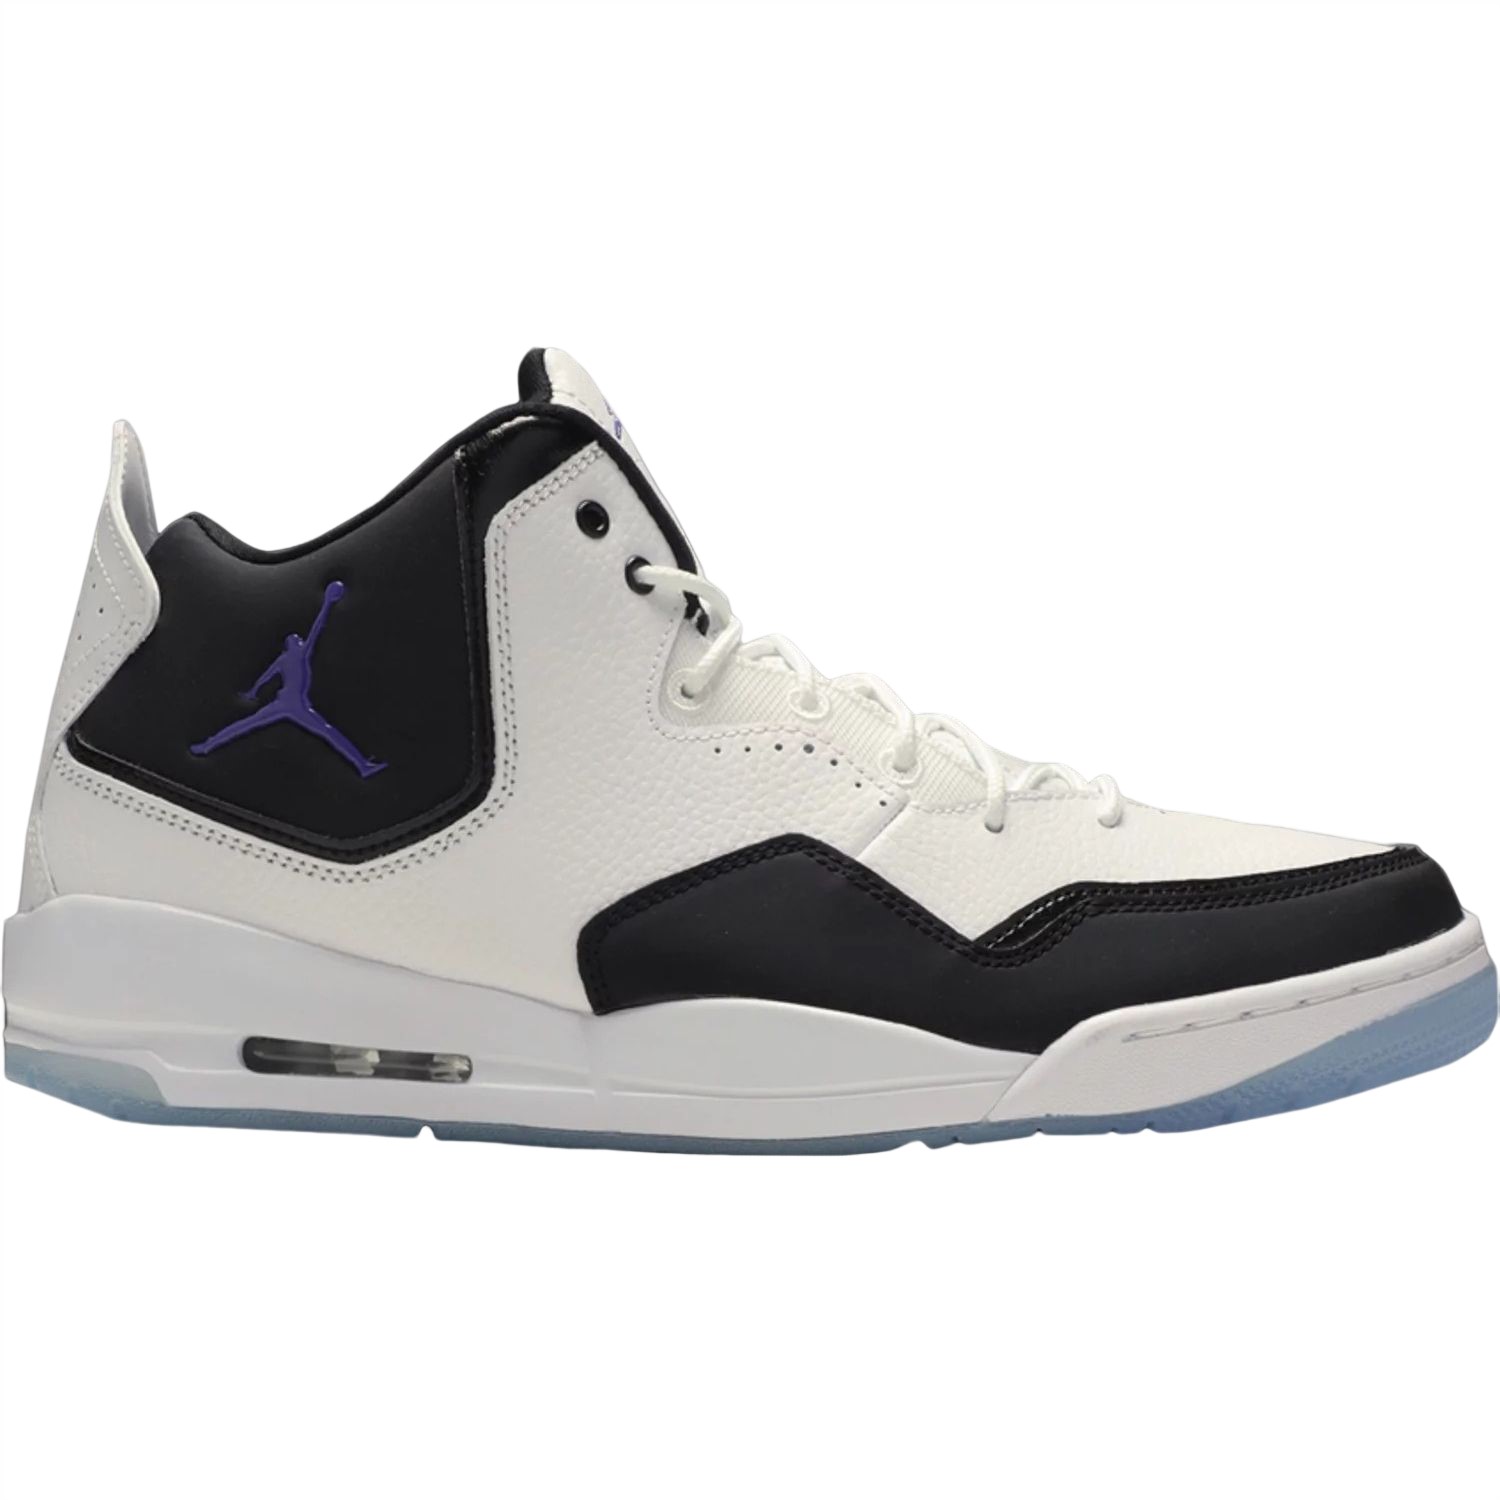 Кроссовки Nike Air Jordan Courtside 23, белый/мультиколор кроссовки nike air jordan courtside 23 серый